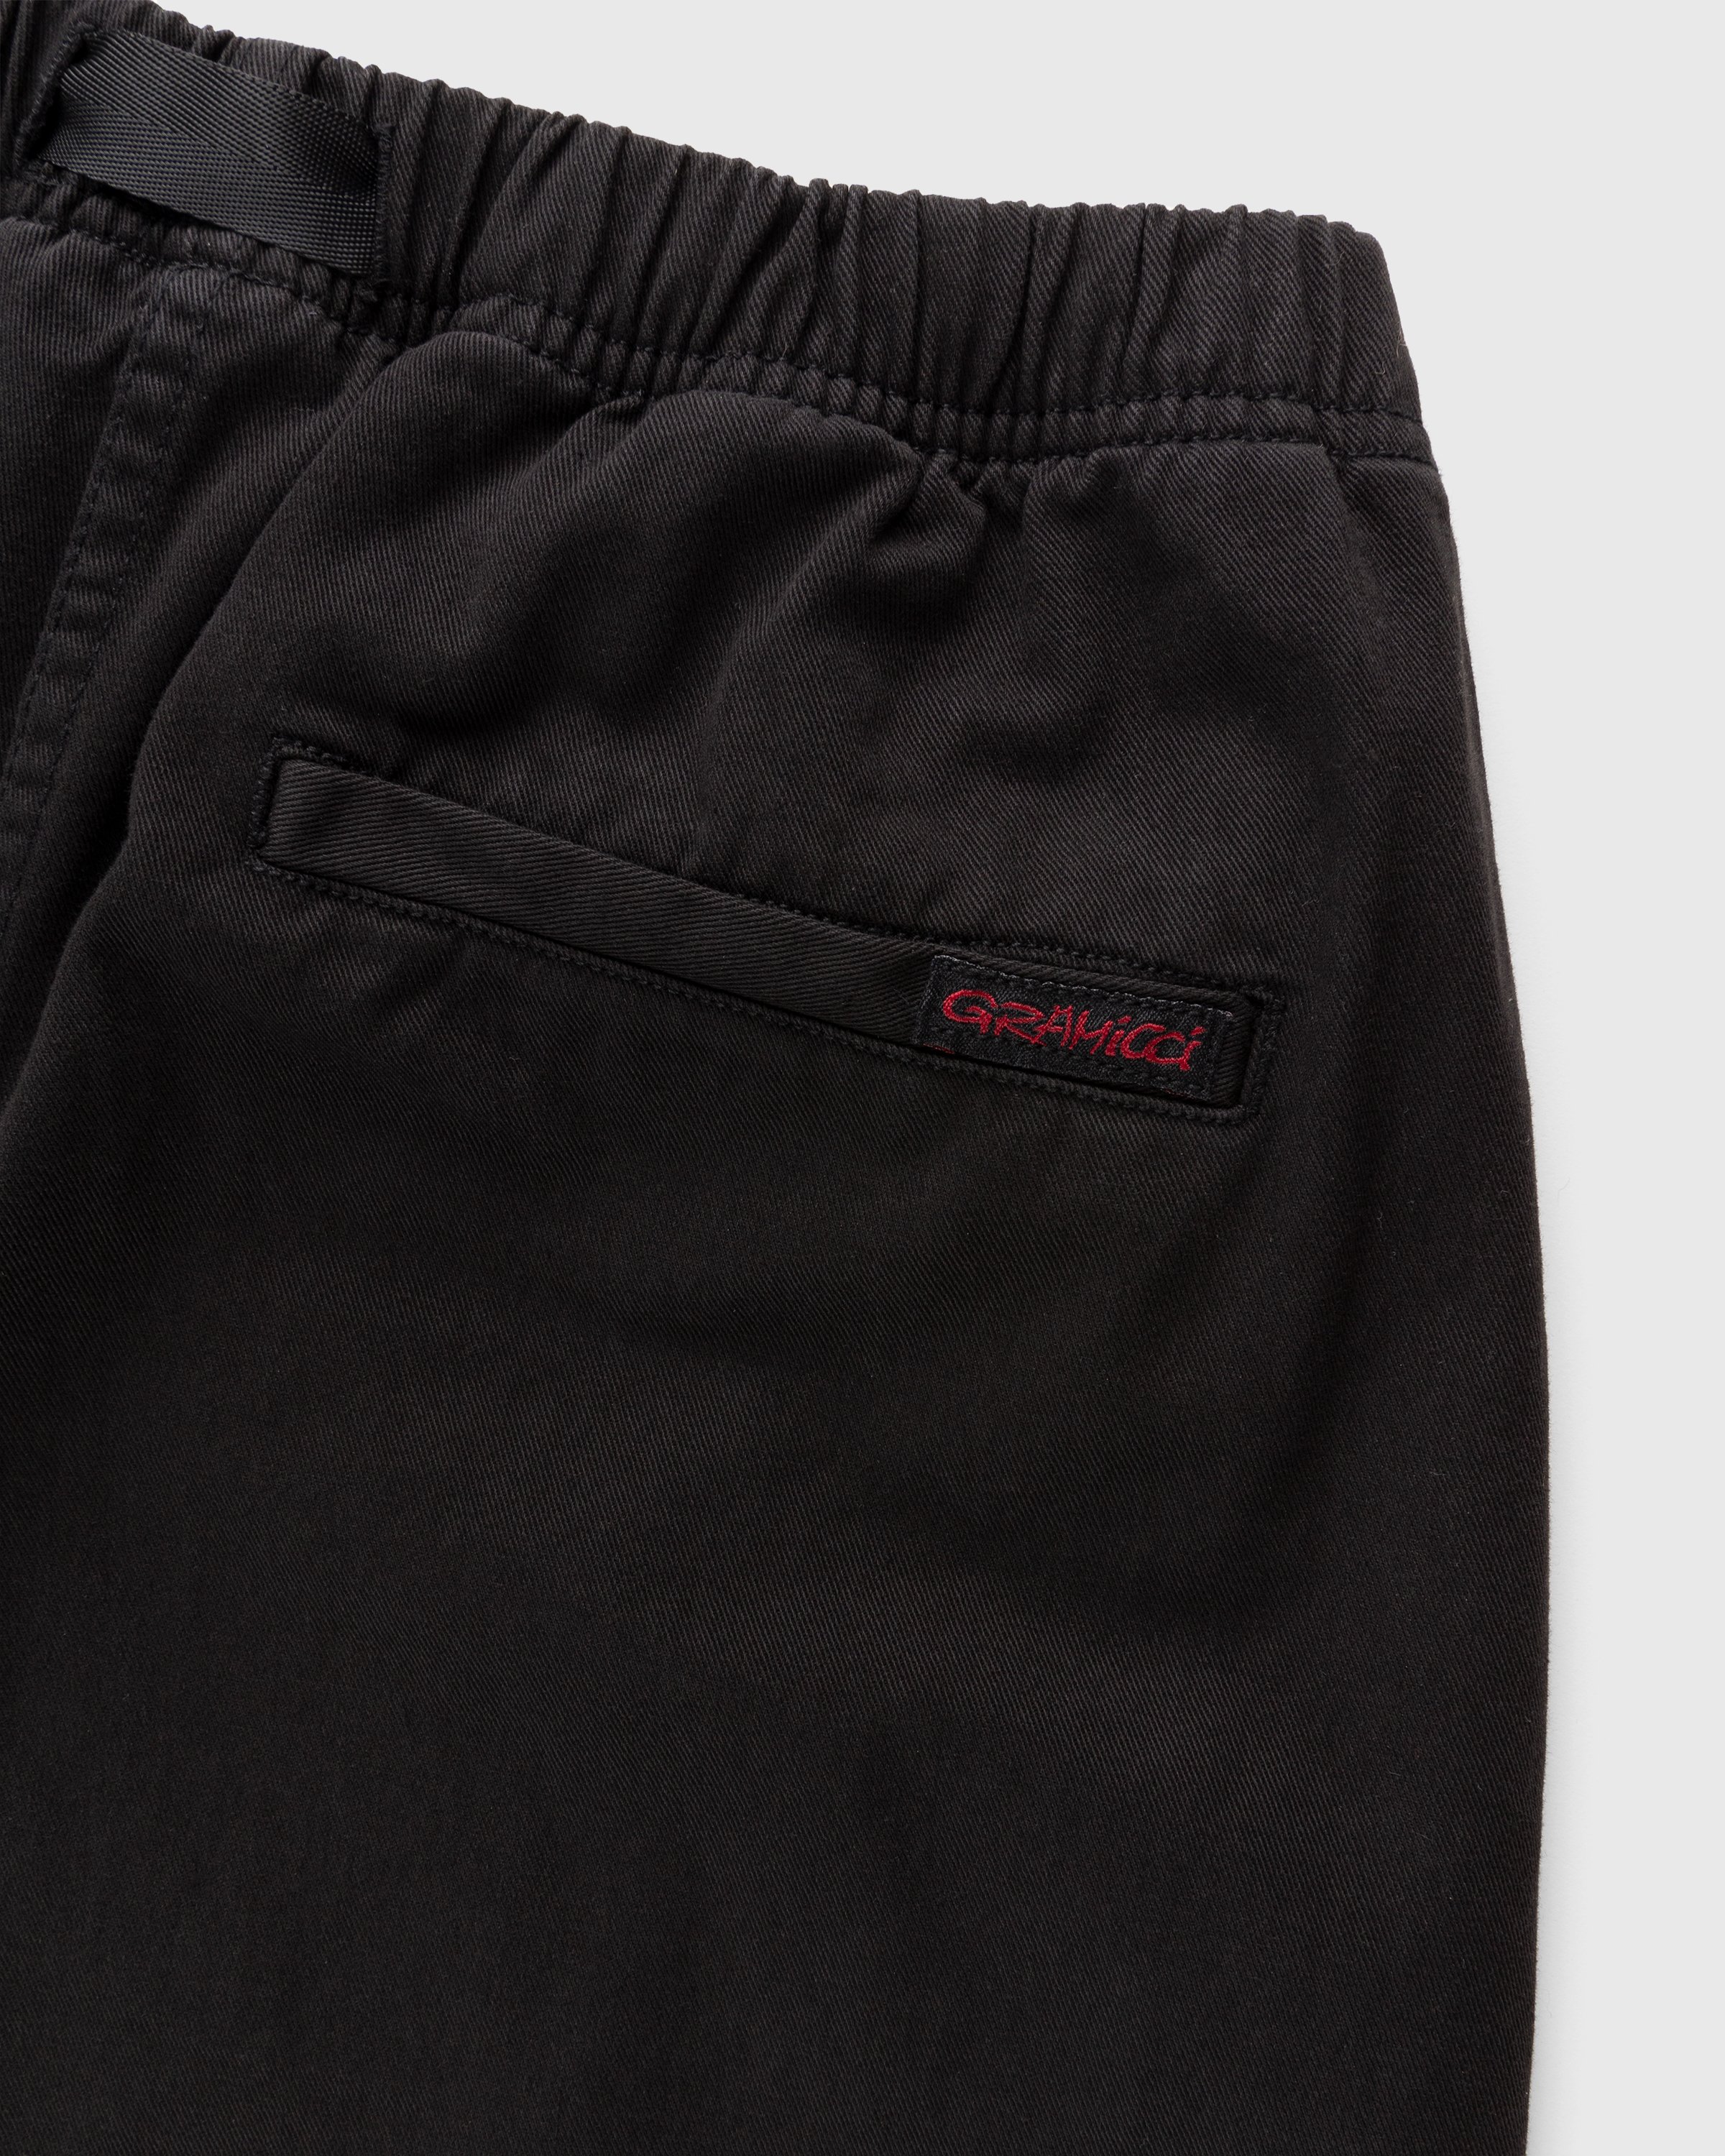 Gramicci - G-Shorts Black - Clothing - Black - Image 6